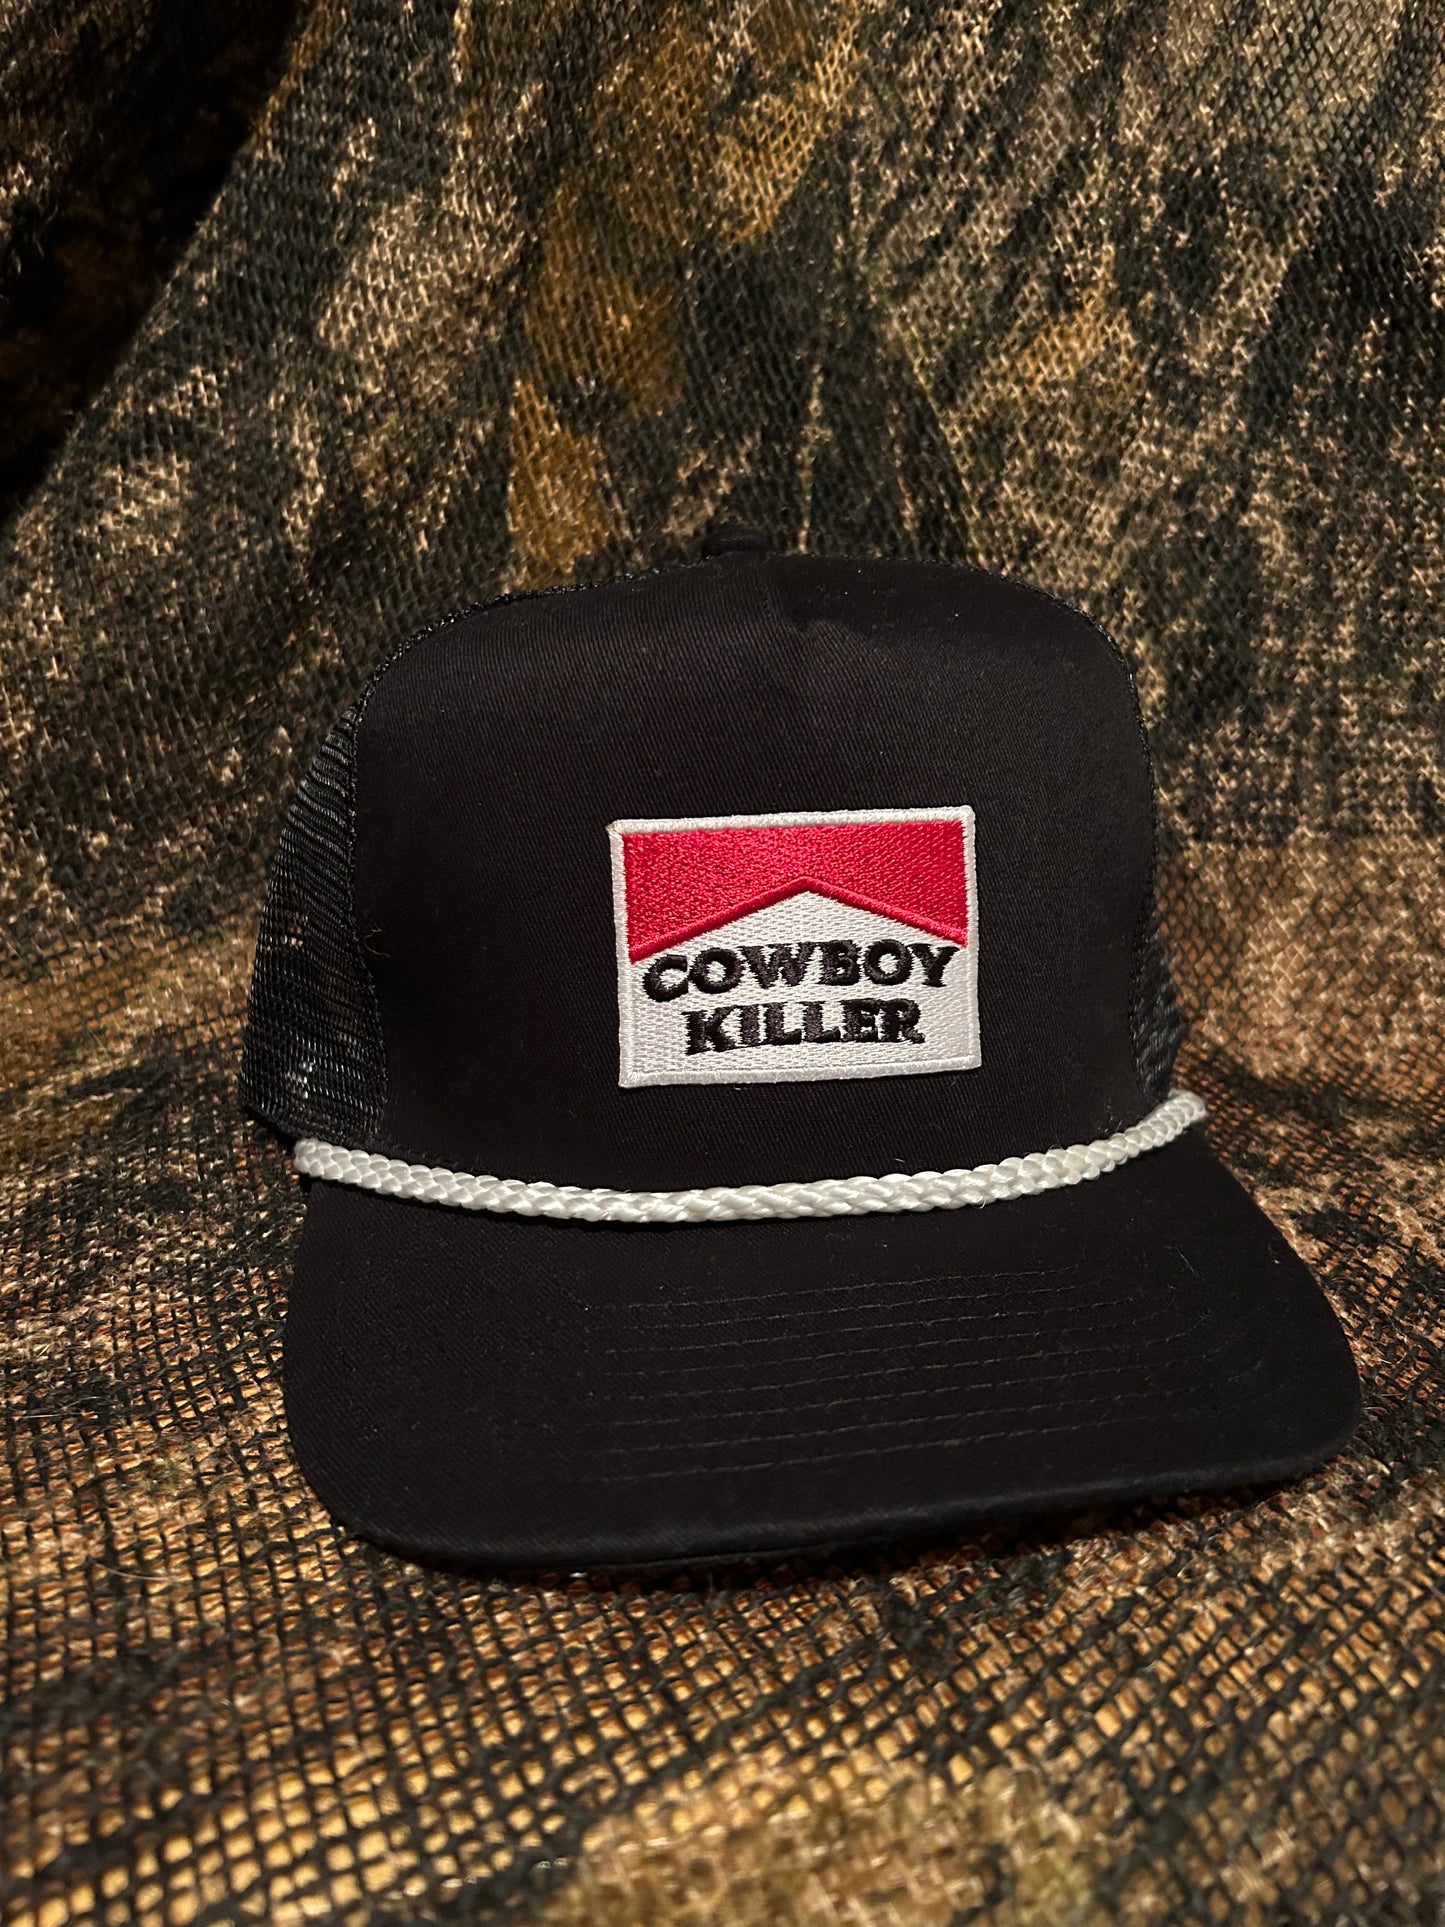 Cowboy Killer Patch on black/white rope brim snapback hat